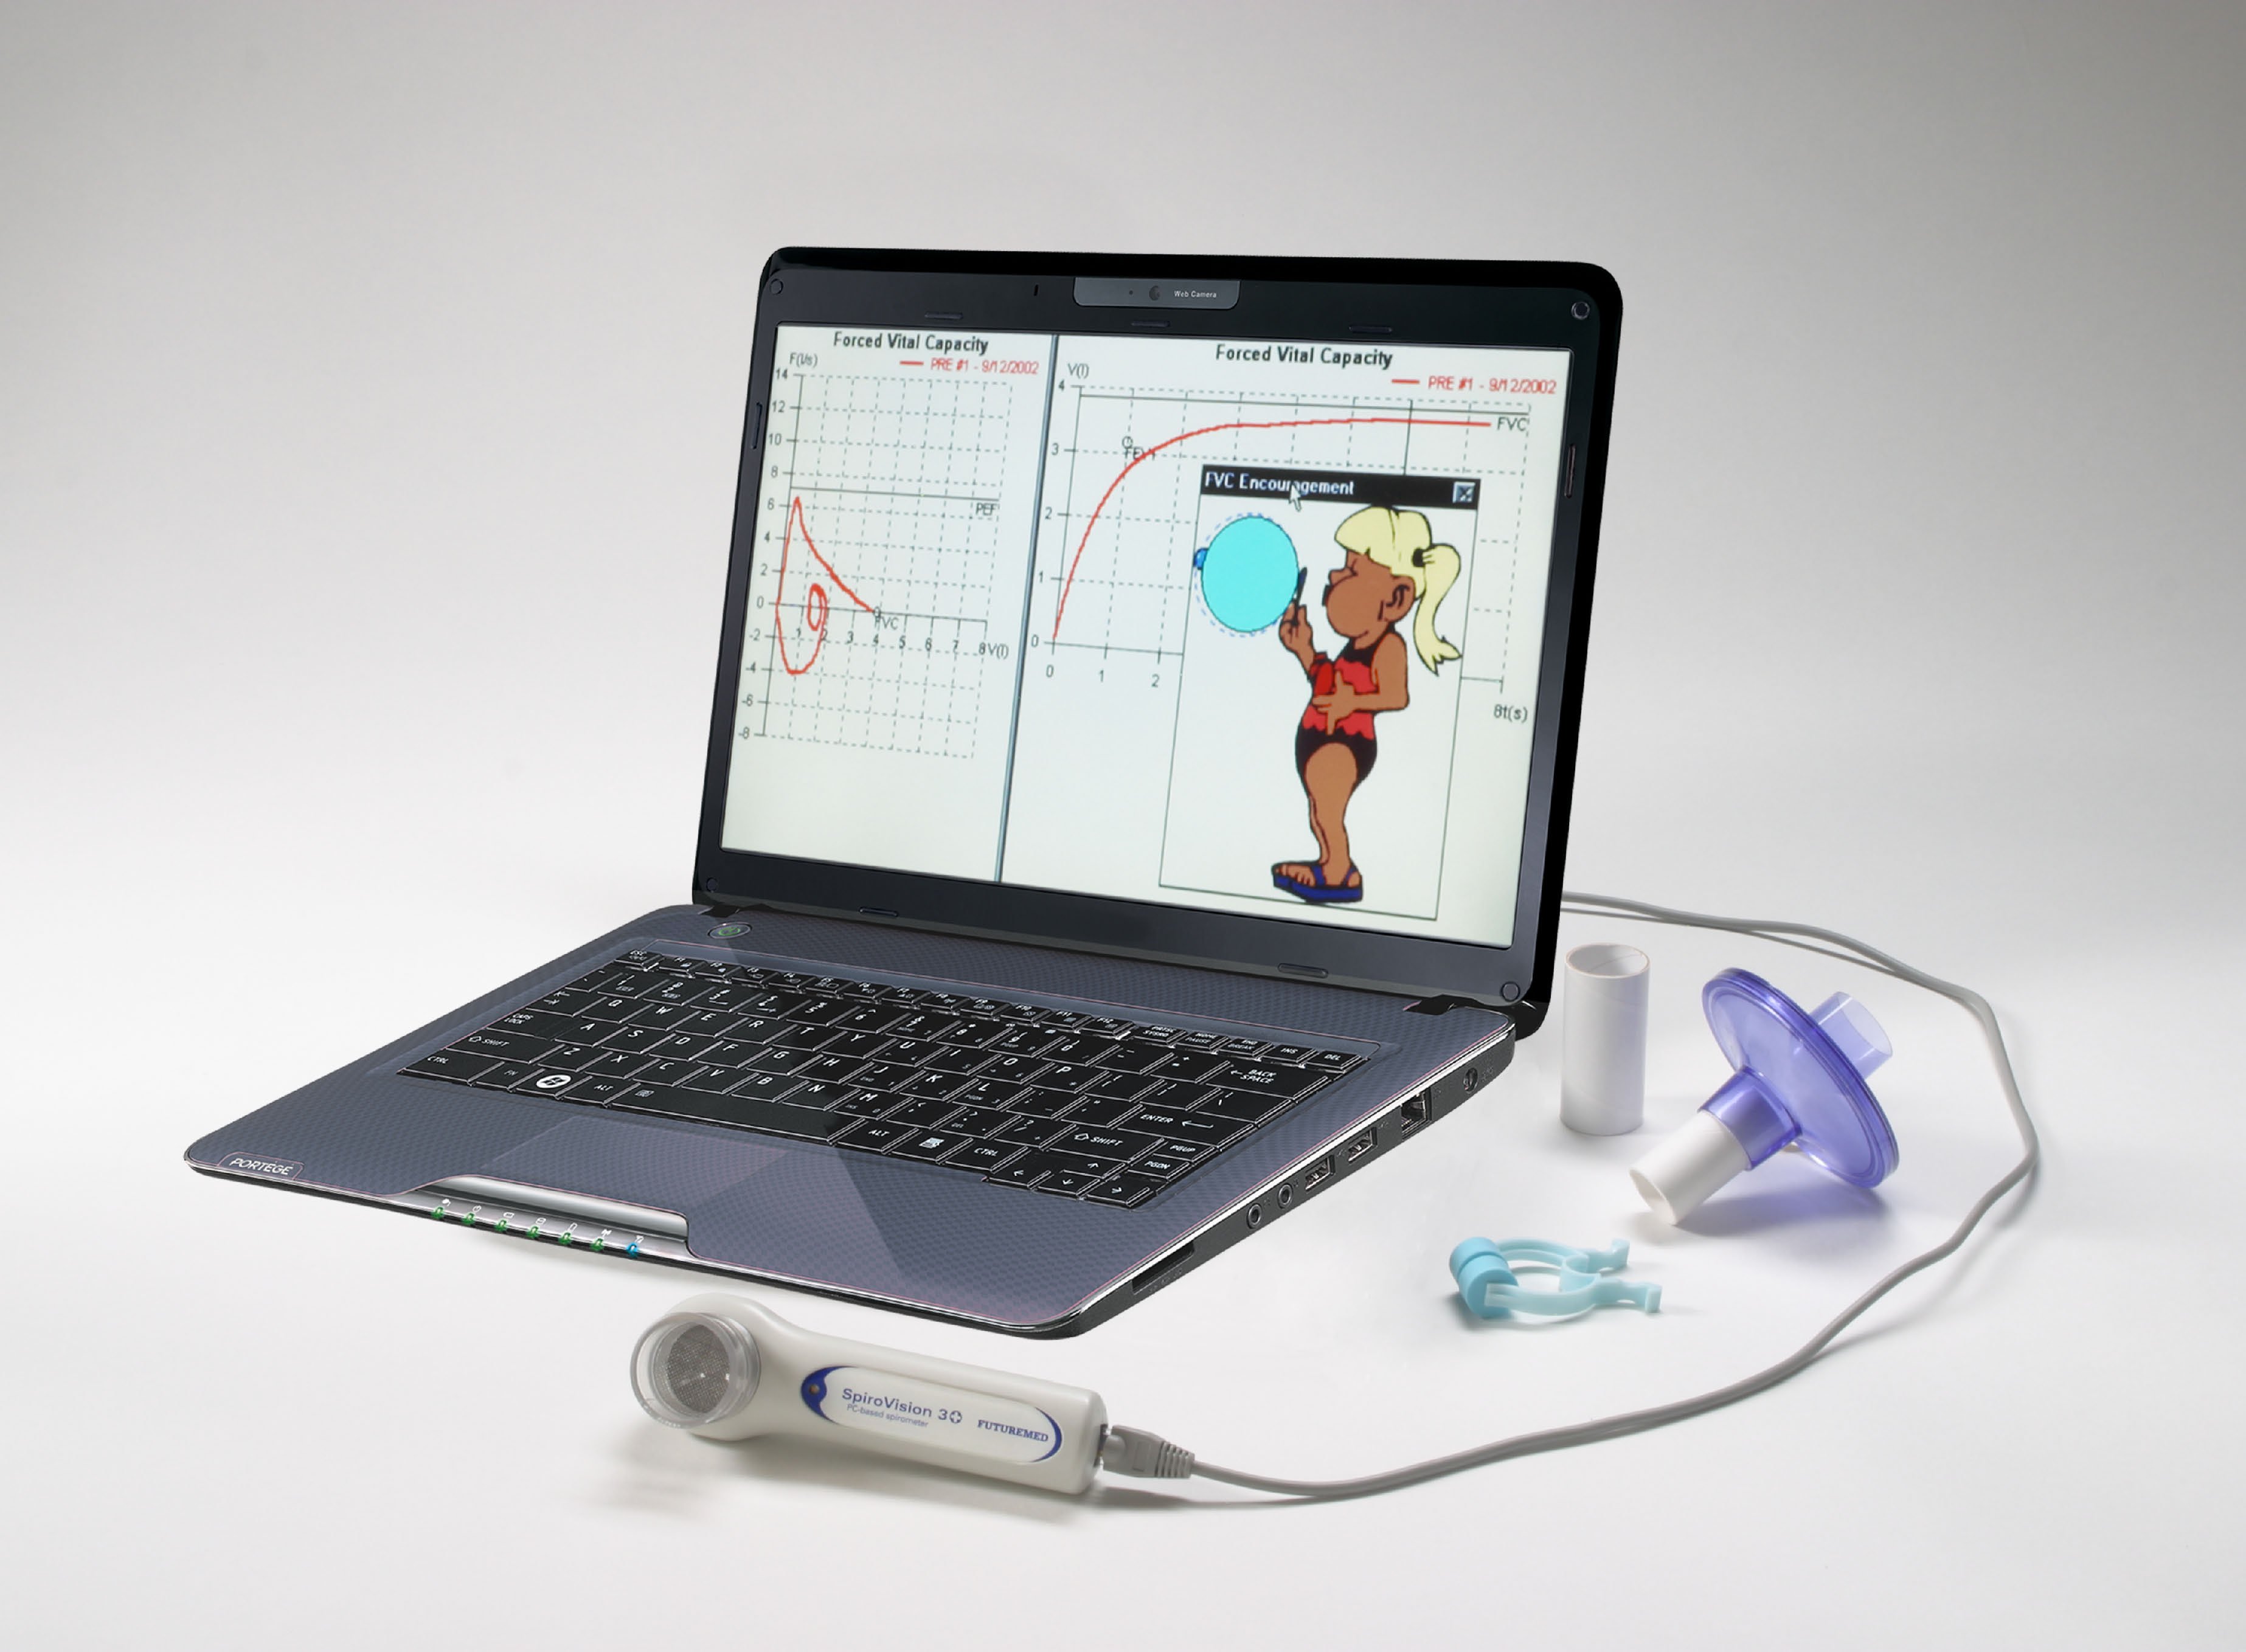 SpiroVision-3+ PC based spirometer